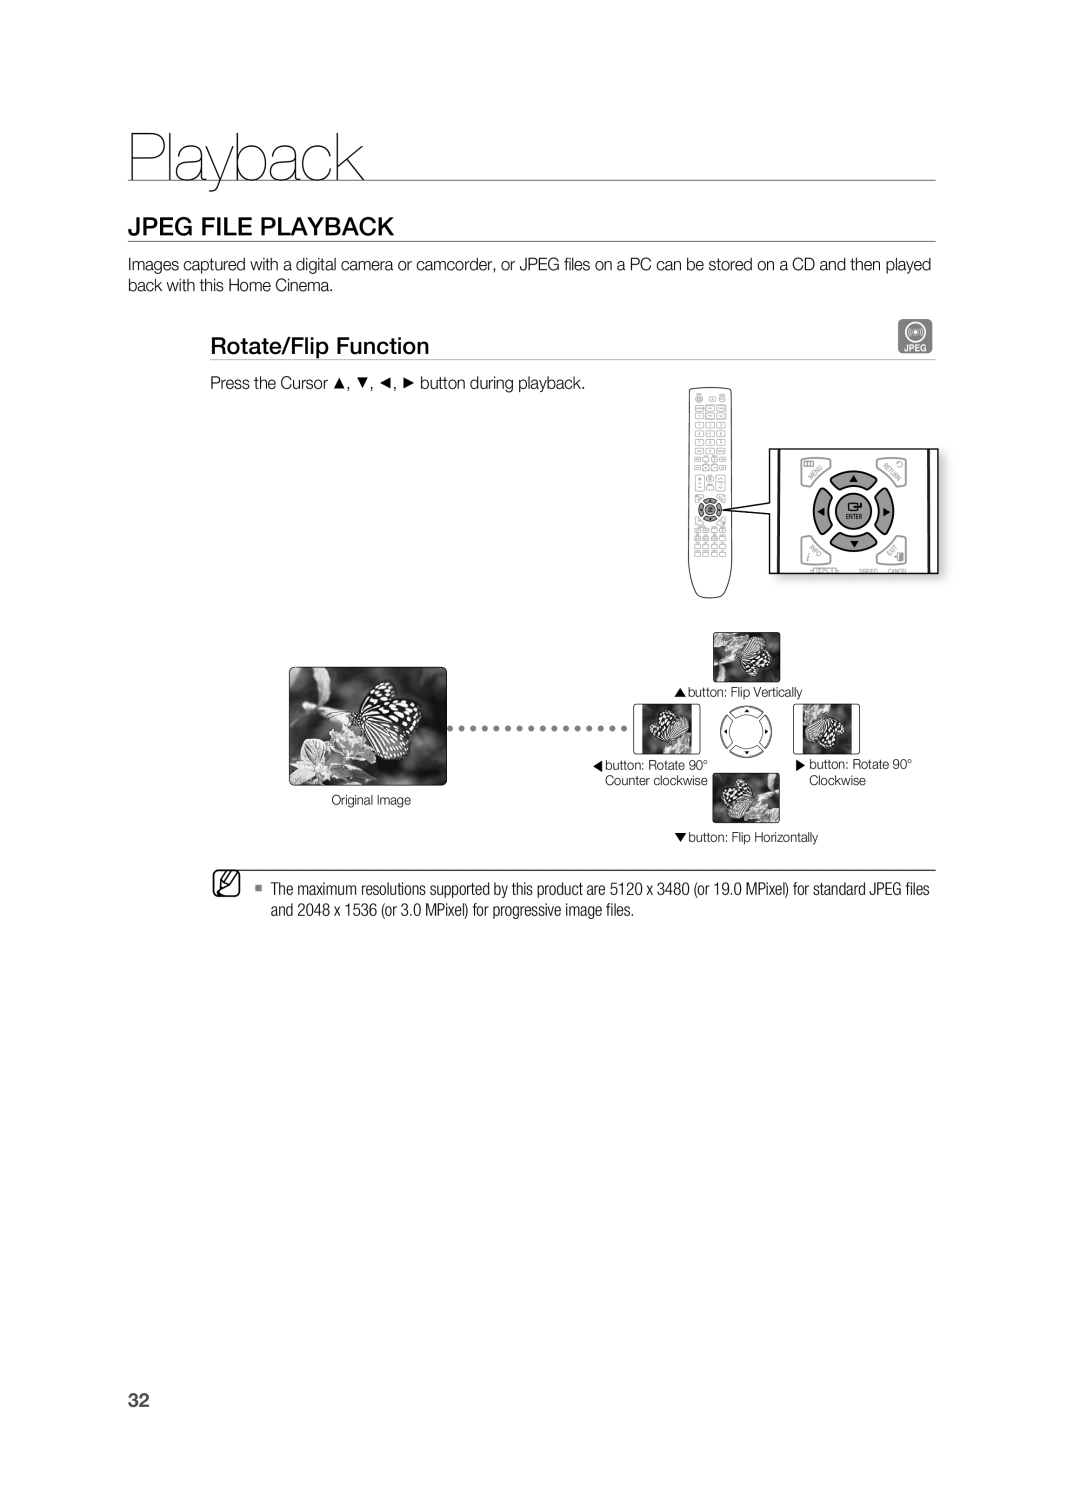 Samsung HT-X725G, HT-TX725G user manual Jpeg File Playback, rotate/Flip Function 